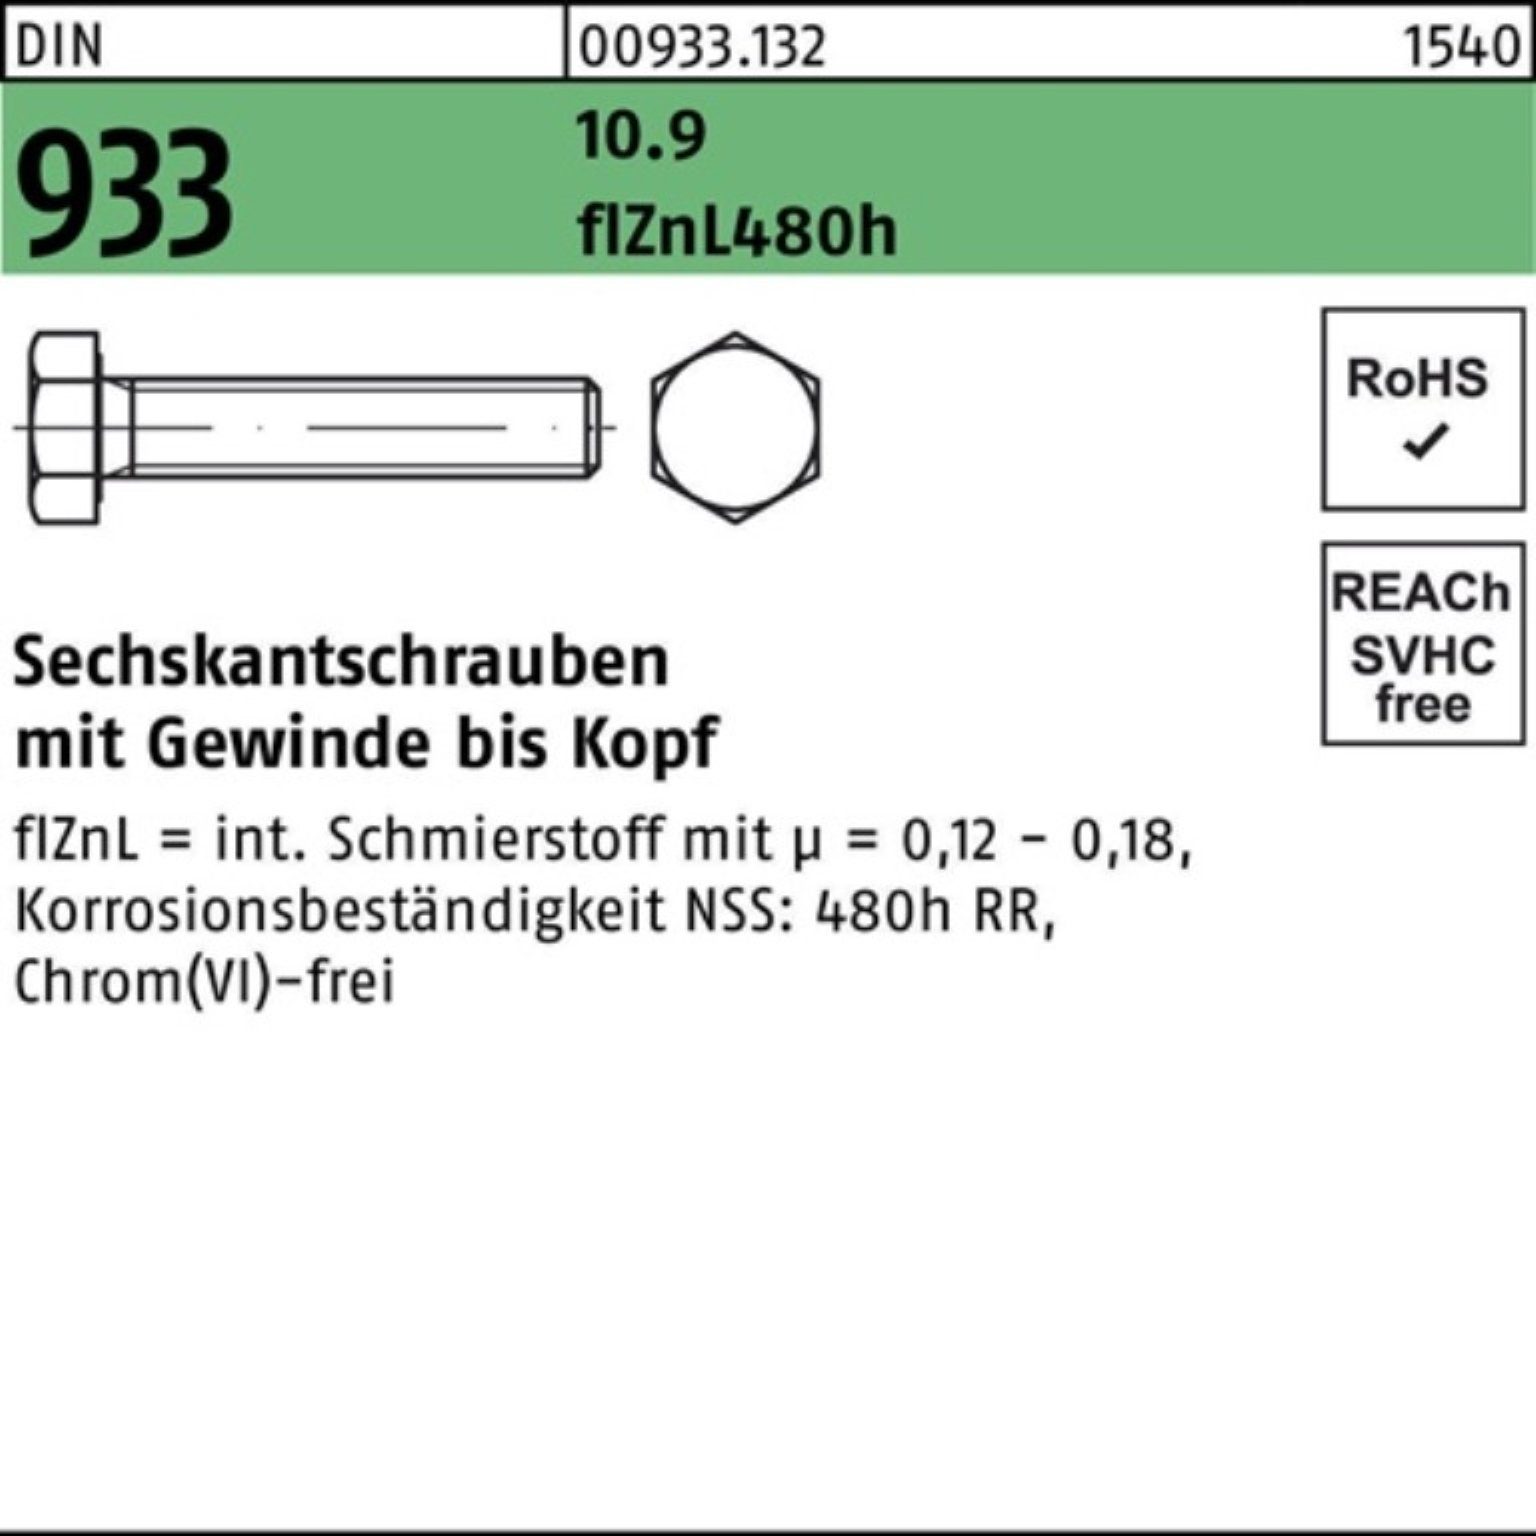 Reyher Sechskantschraube 200er Pack Sechskantschraube DIN 933 VG M8x 50 10.9 flZnL/nc/x/x/480h